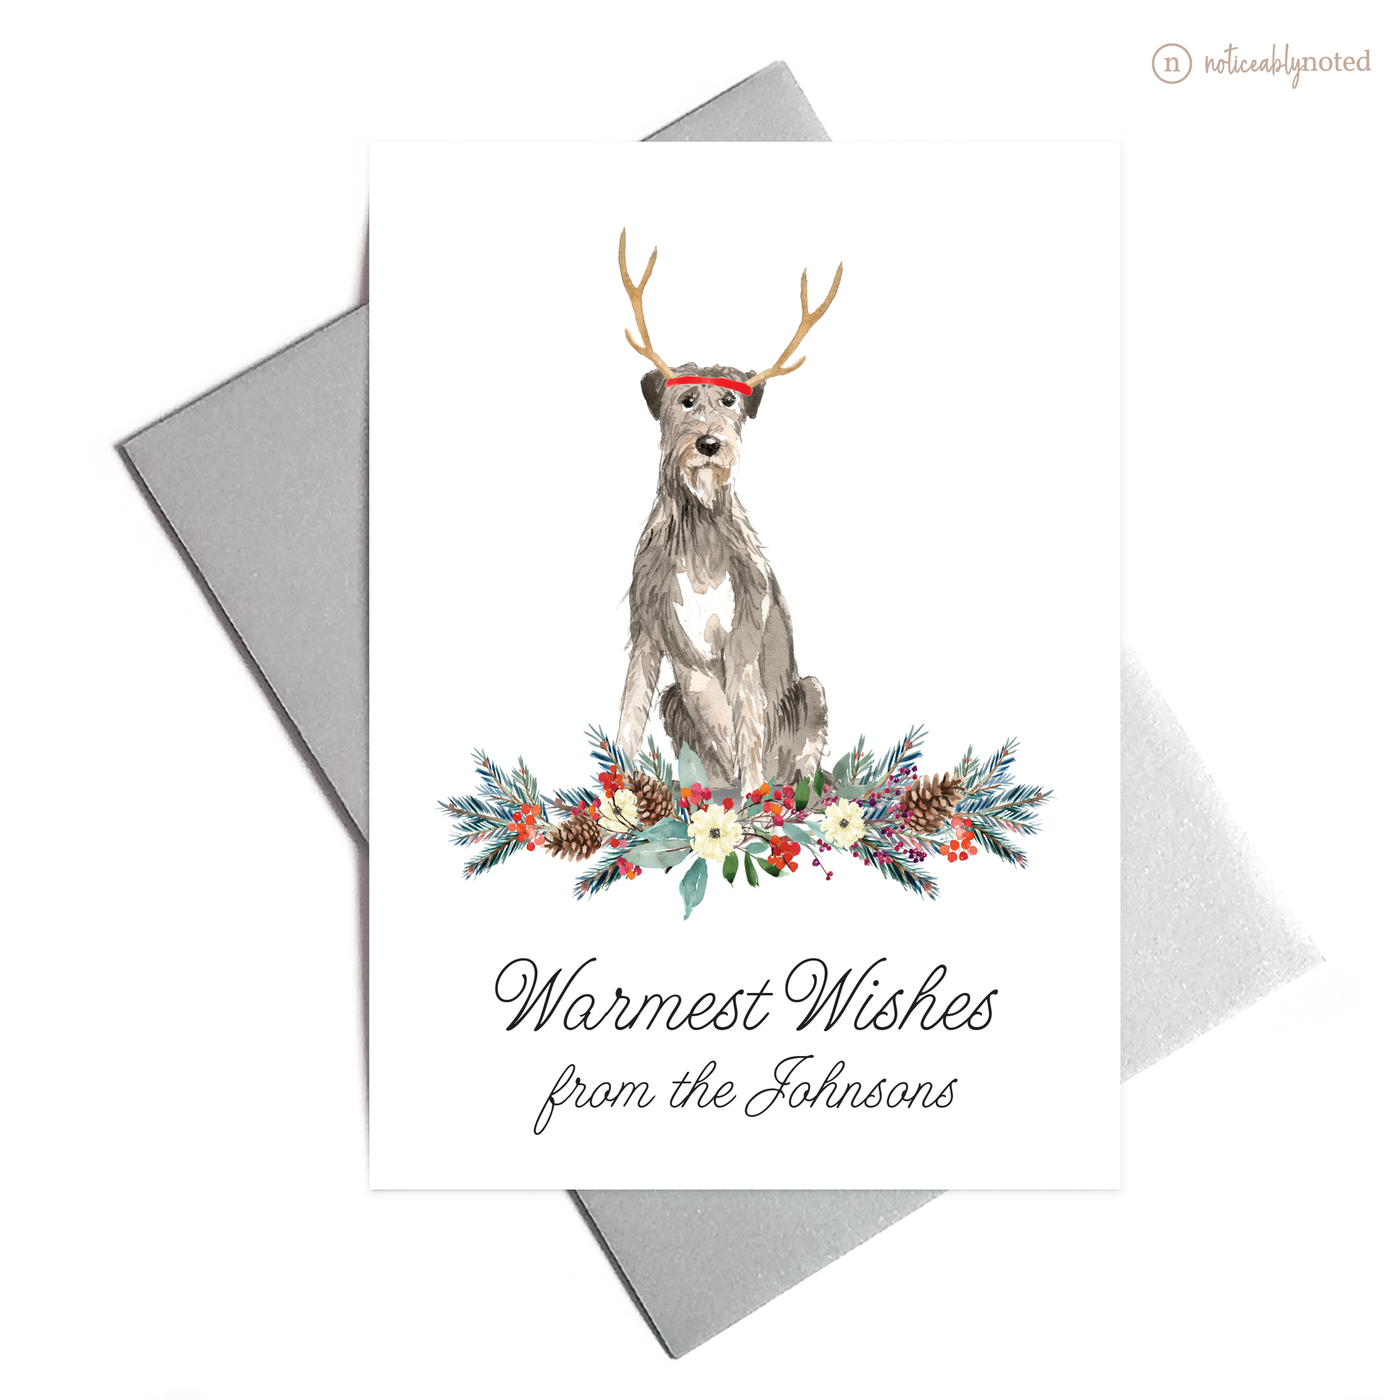 Irish Wolfhound Dog Holiday Greeting Cards | Noticeably Noted